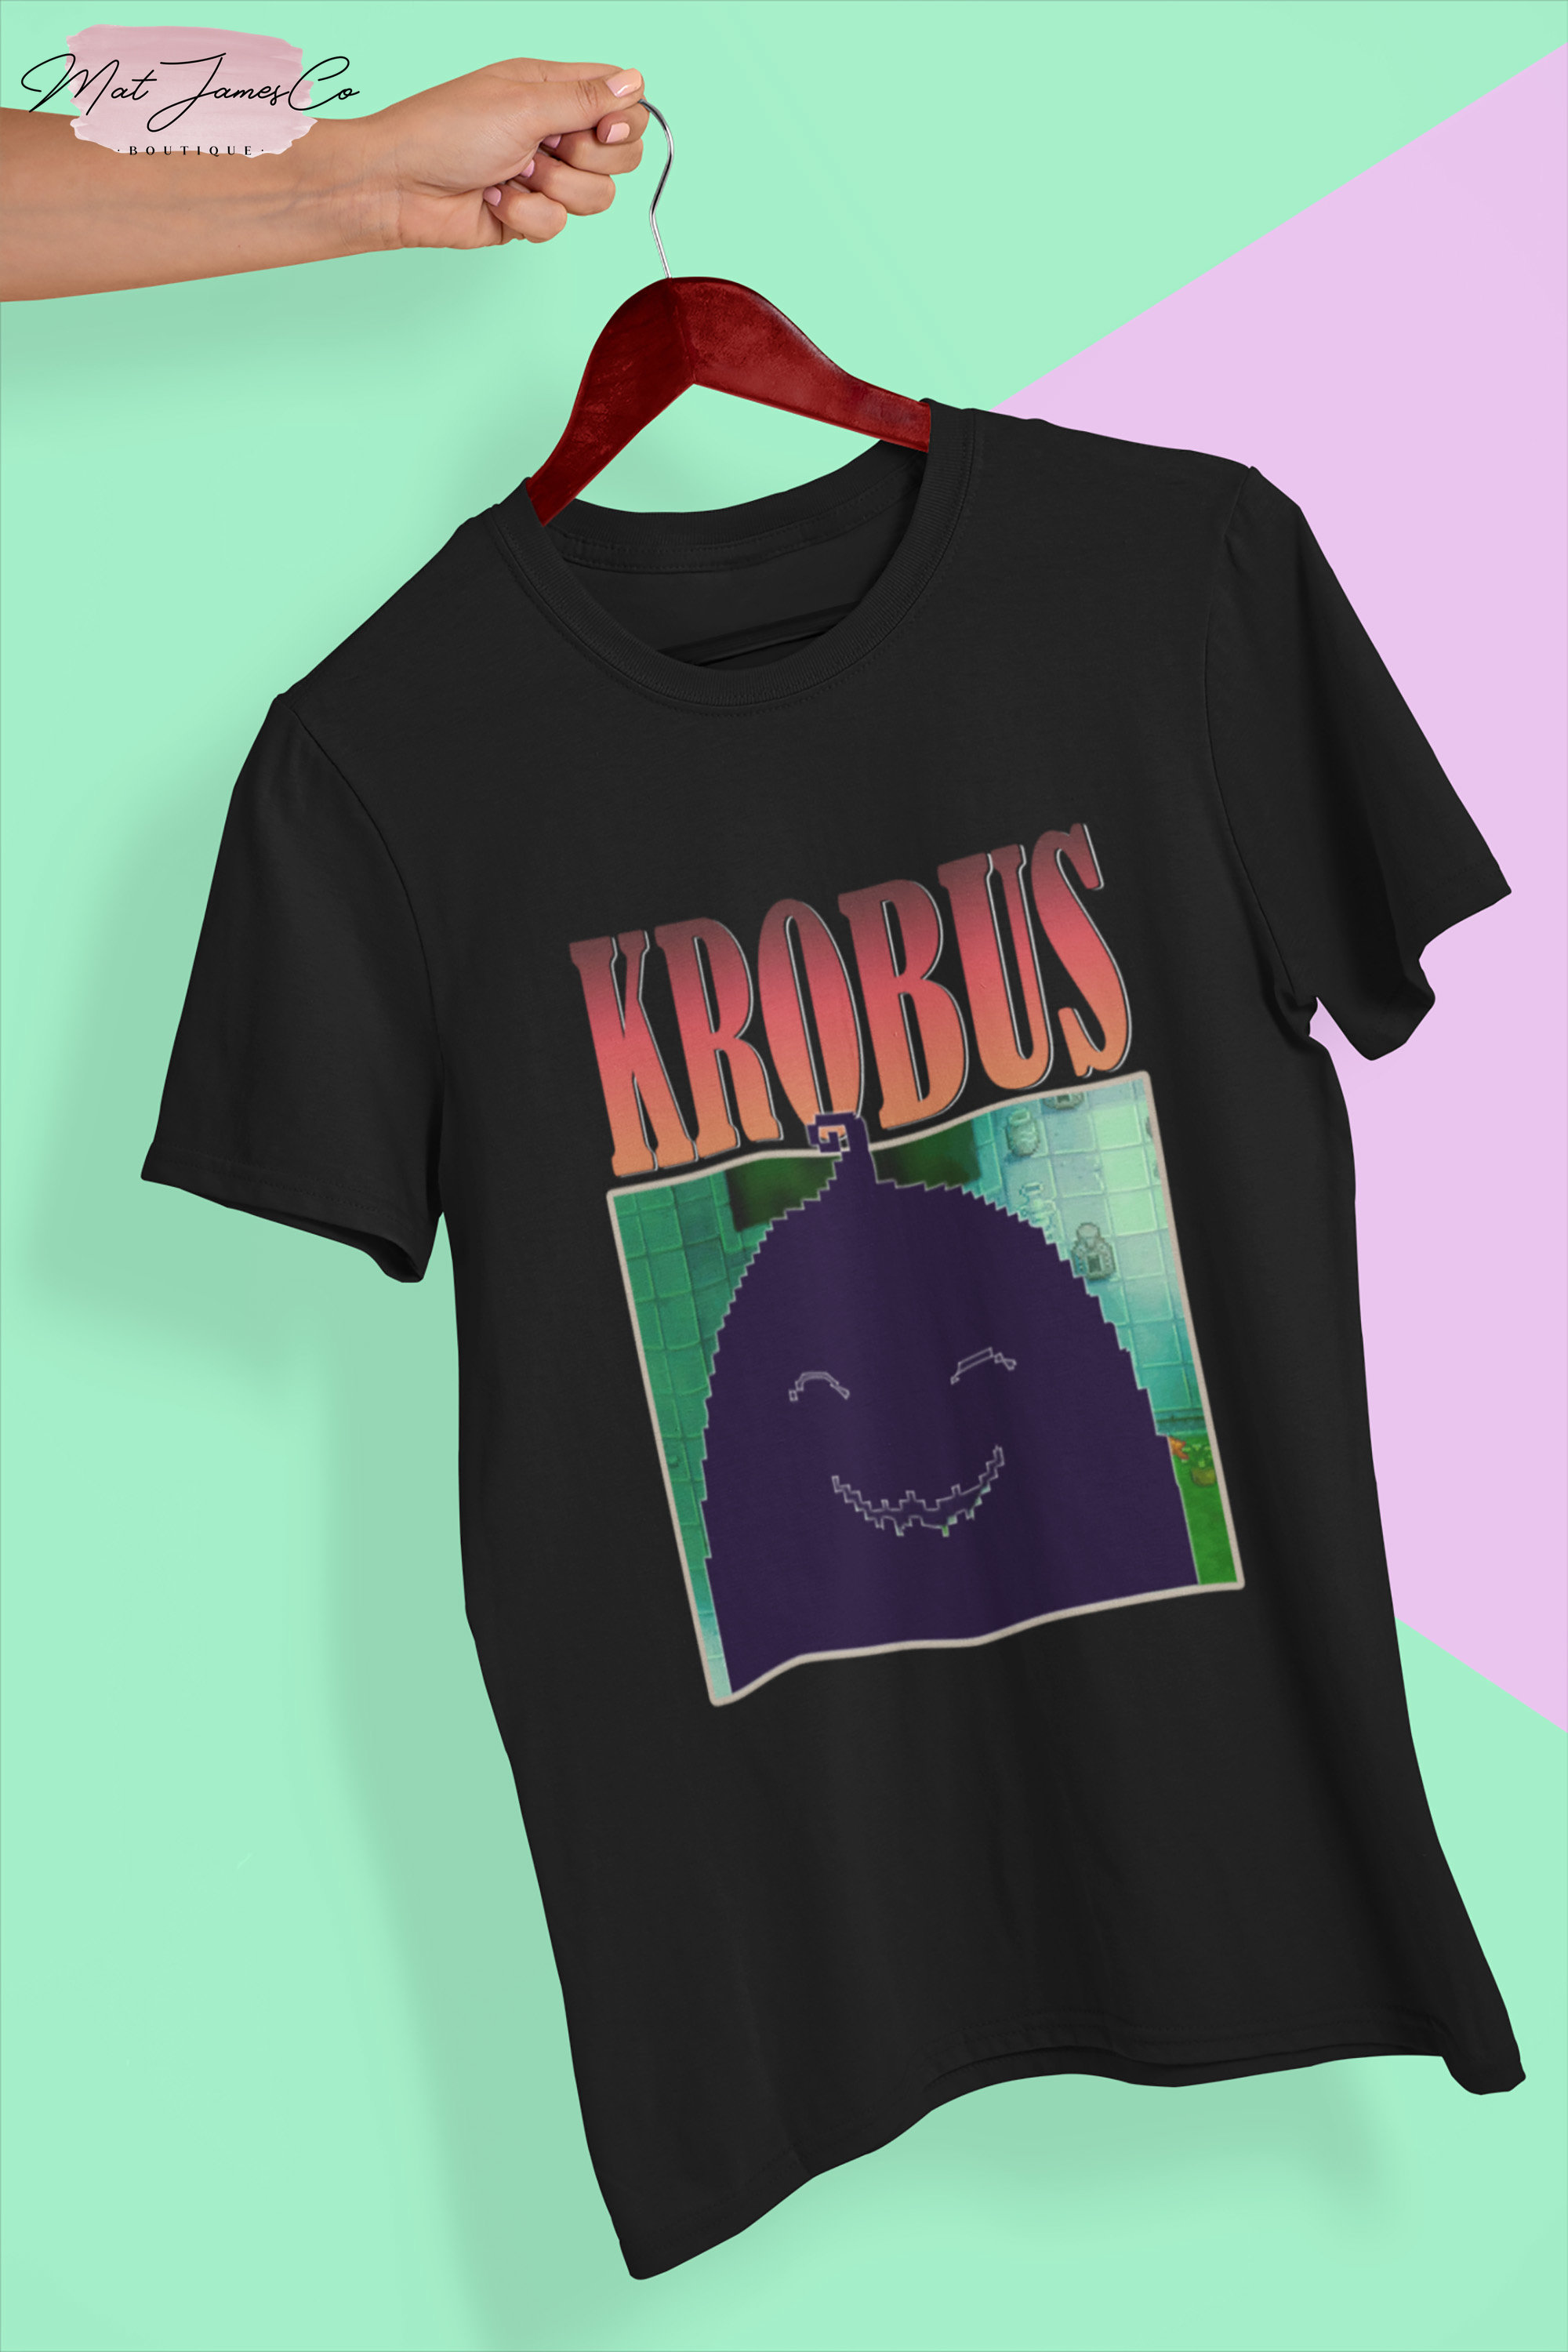 STARDW KROBUS Vintage Shirt Food Spirit Stardw Vally Shirt, - Inspire Uplift